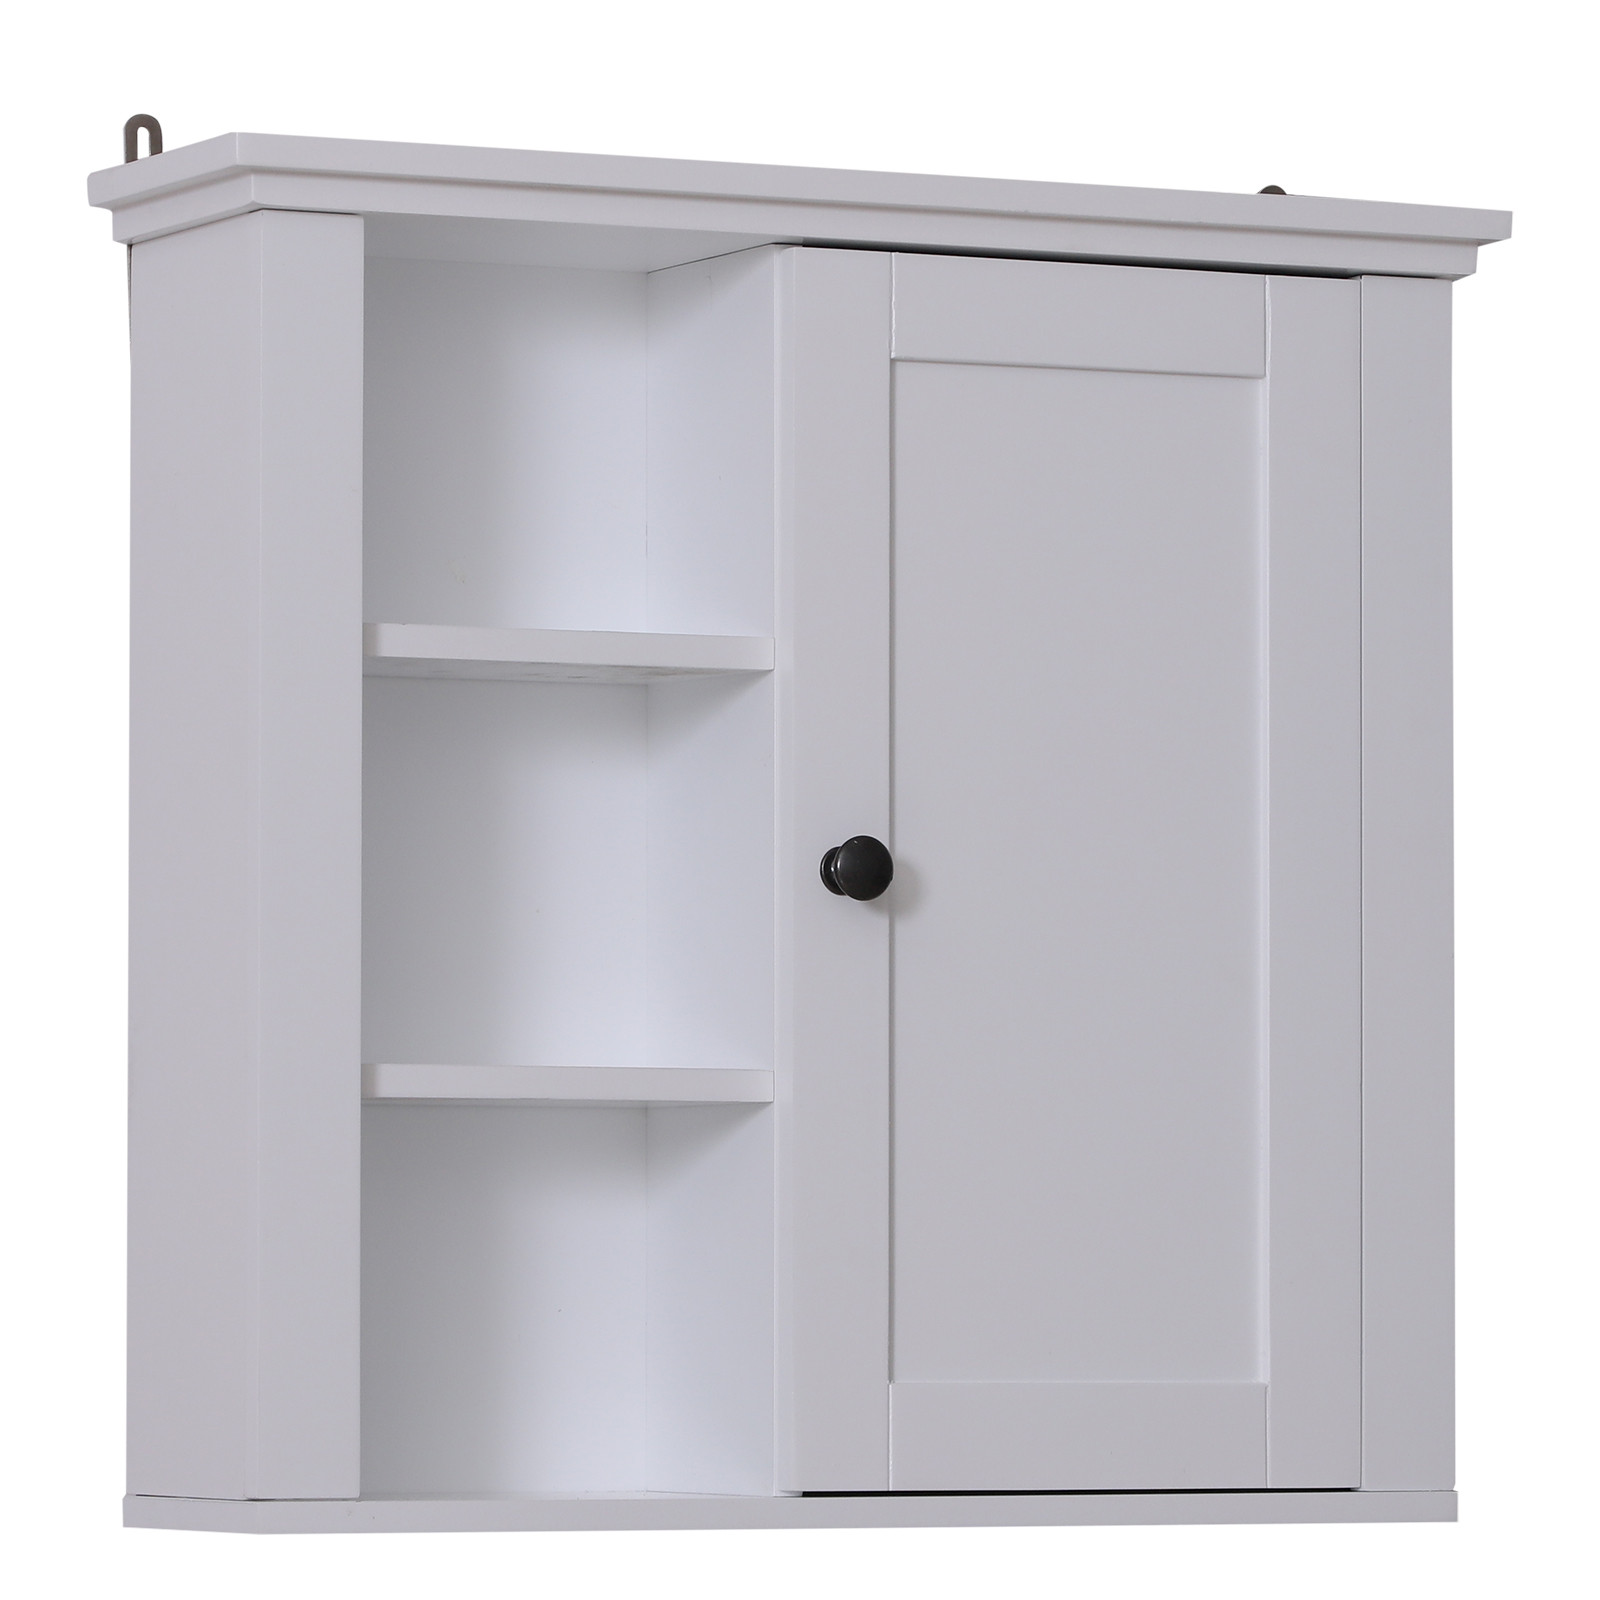 Wall Mount Bathroom Cabinet White
 HOM 21” Wood Wall Mount Bathroom Linen Storage Cabinet